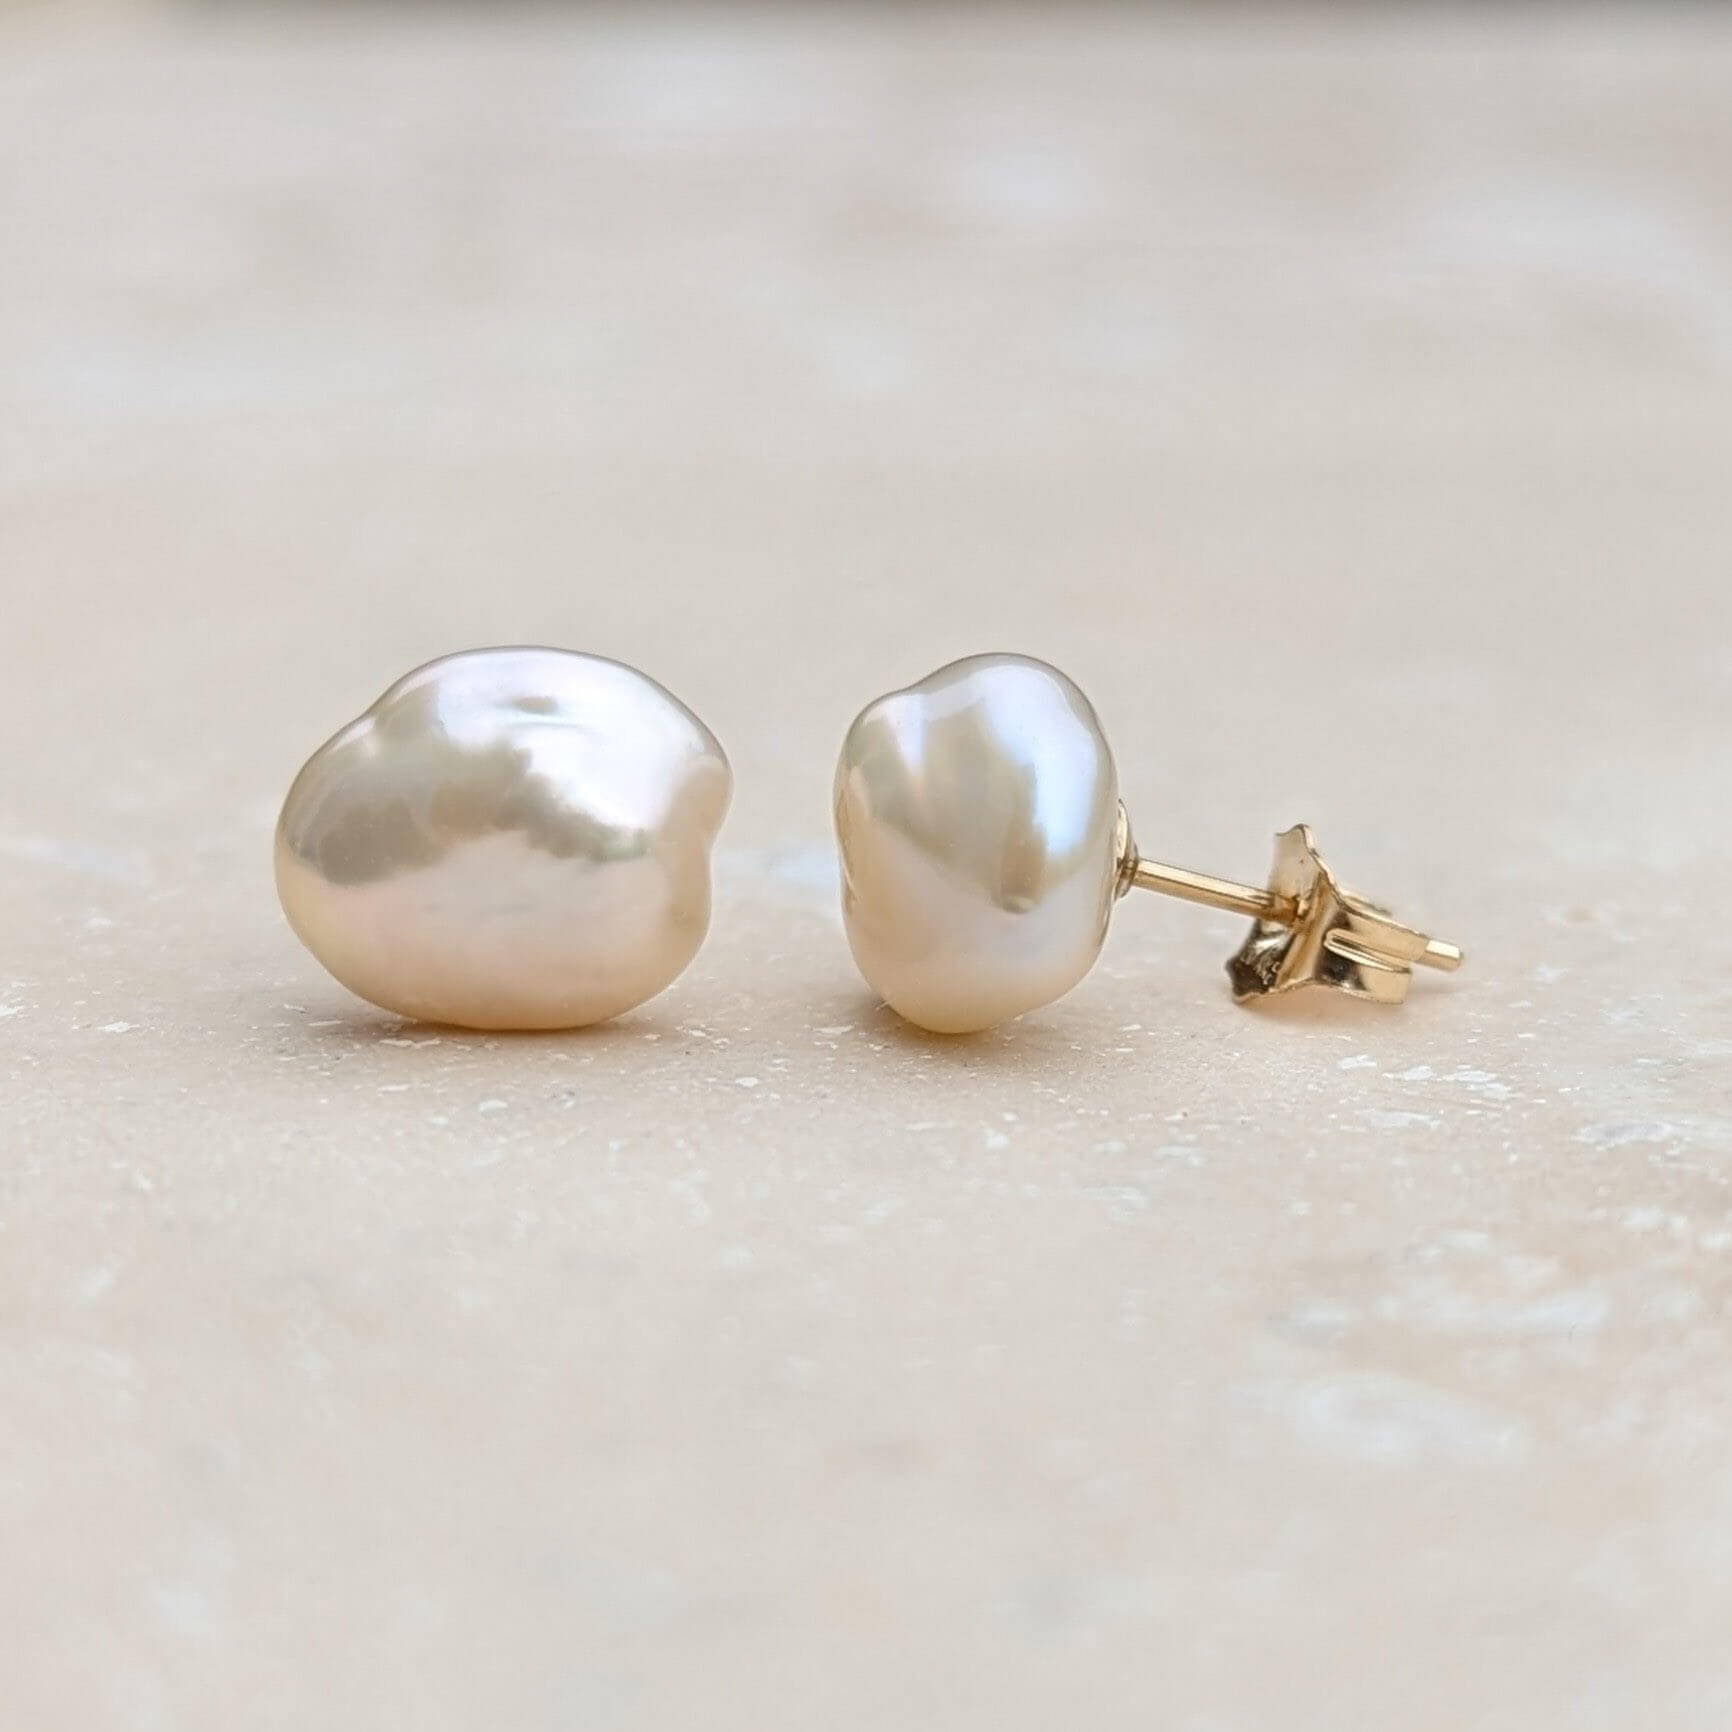 pearl stud earrings in gold filled